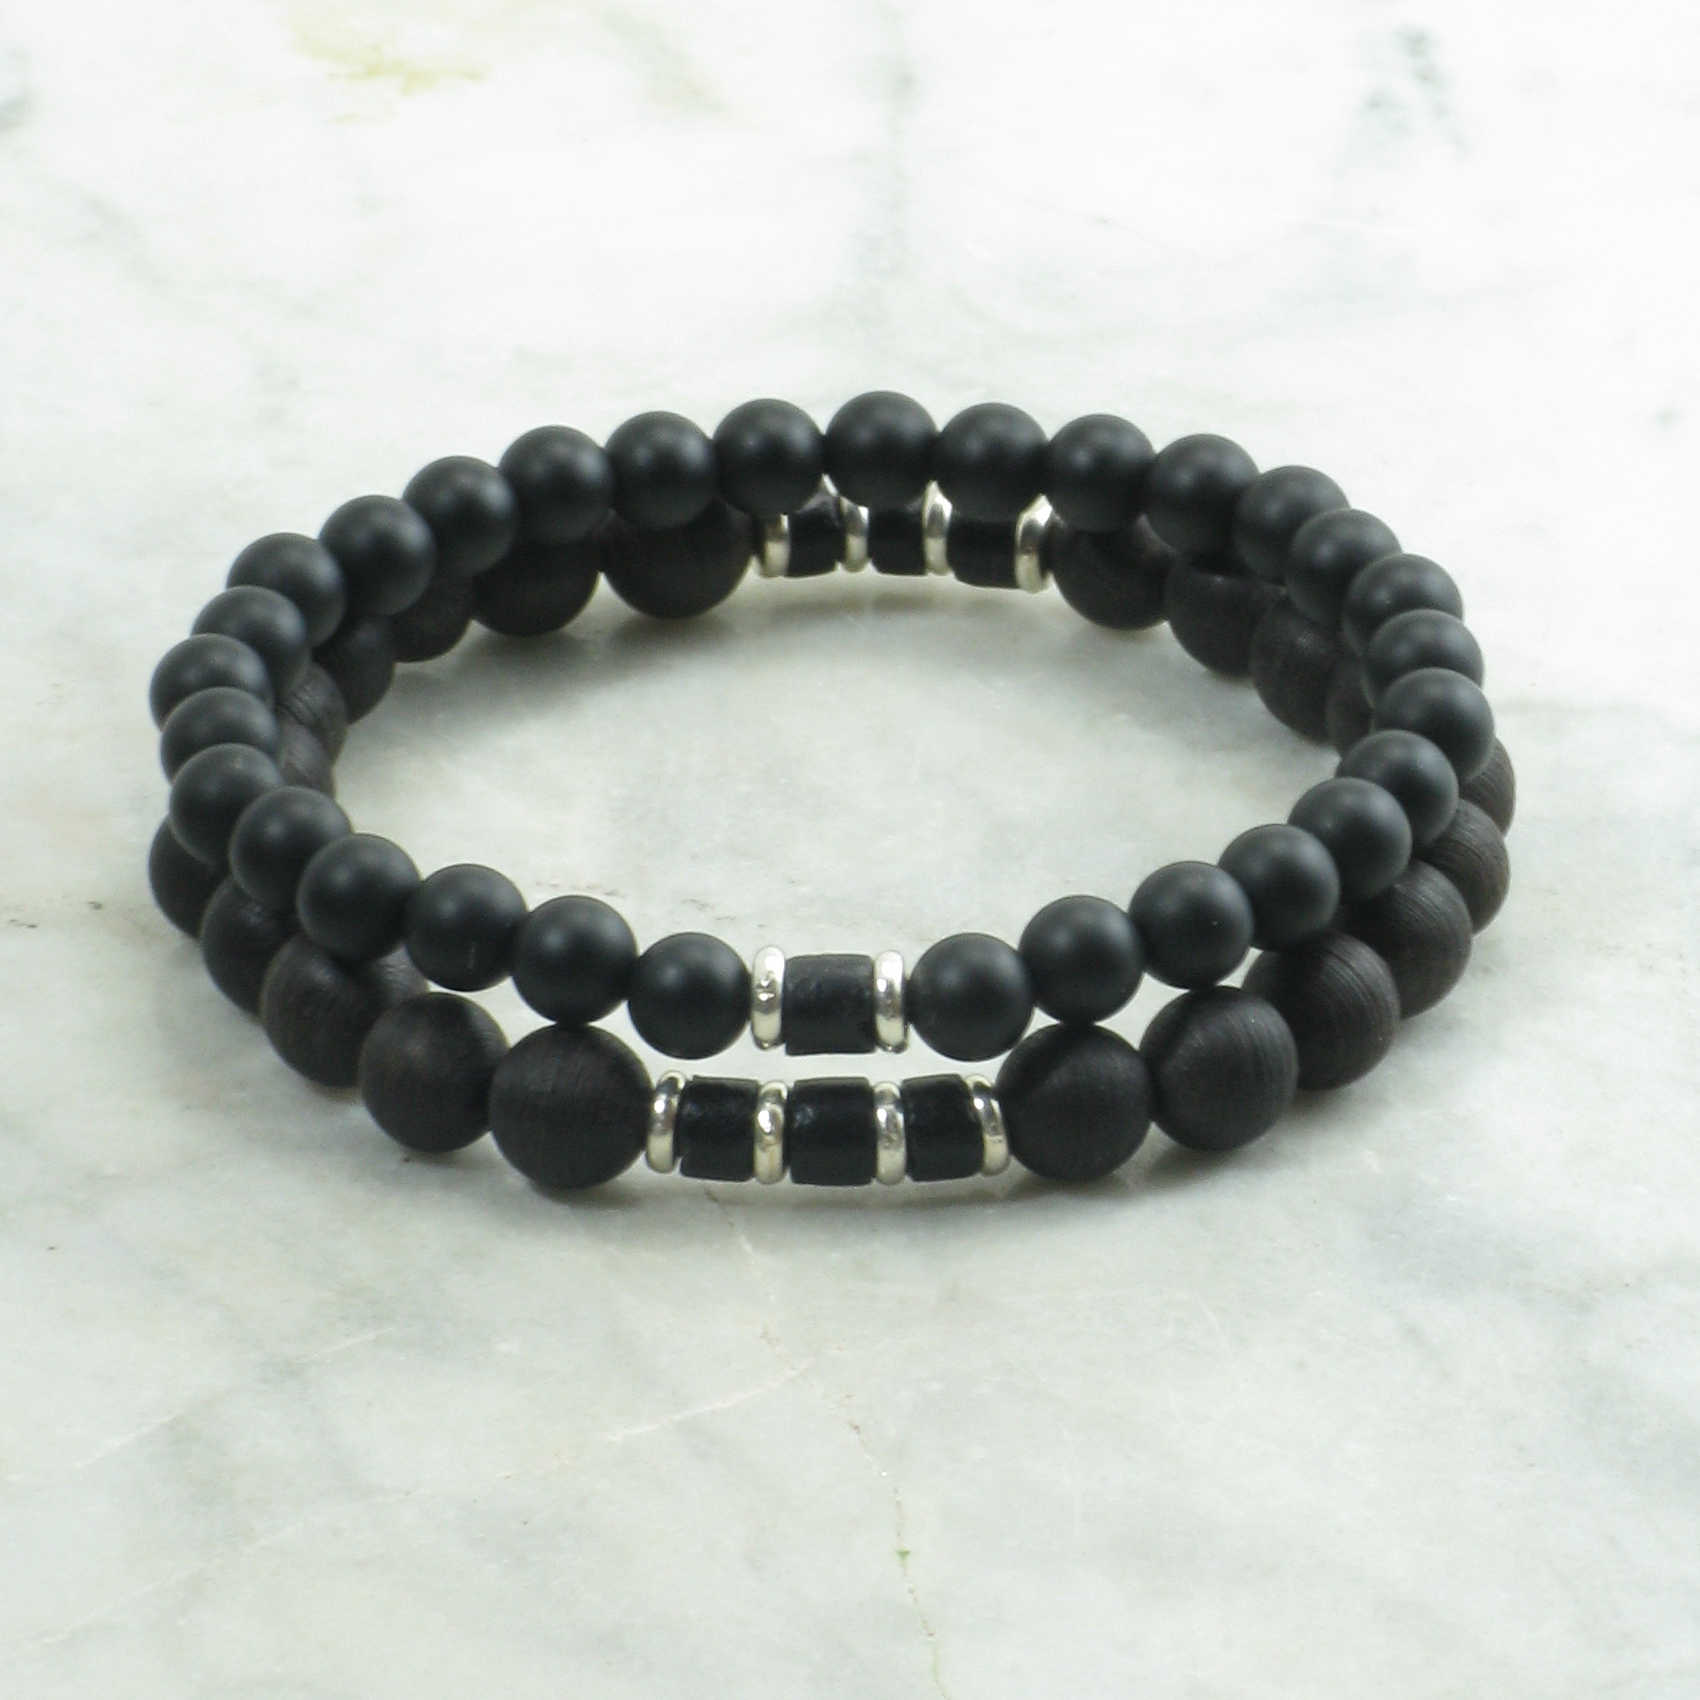 Mala Beads for Yoga Meditation - Zen Gemstone Necklace Spirit